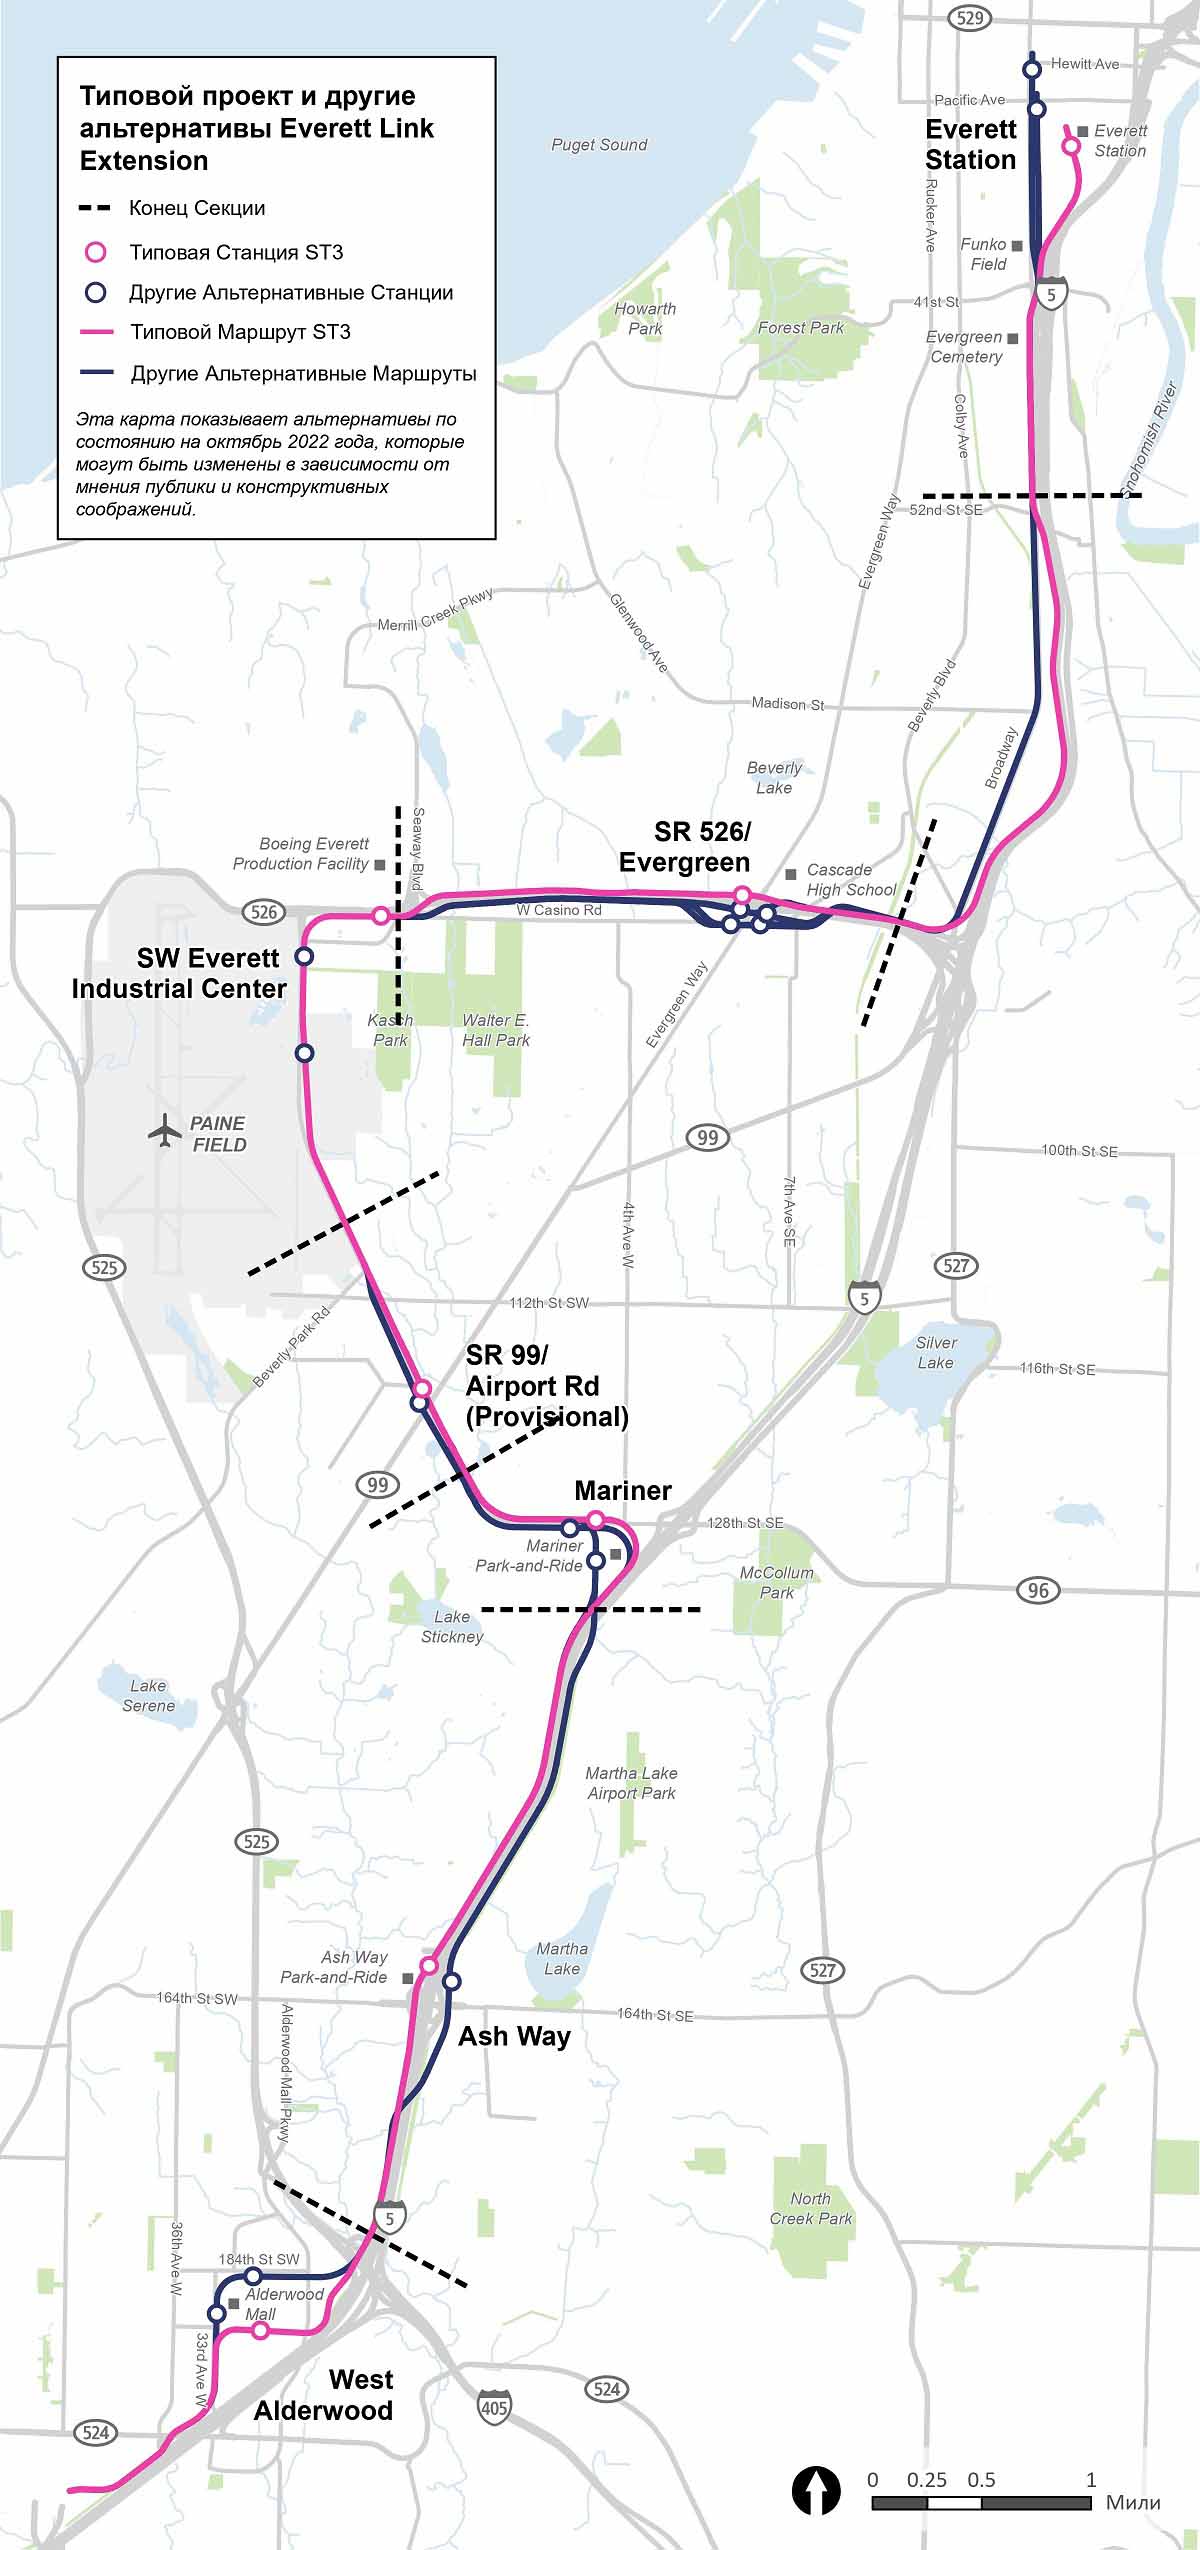 Карта территории проекта Everett Link Extension.